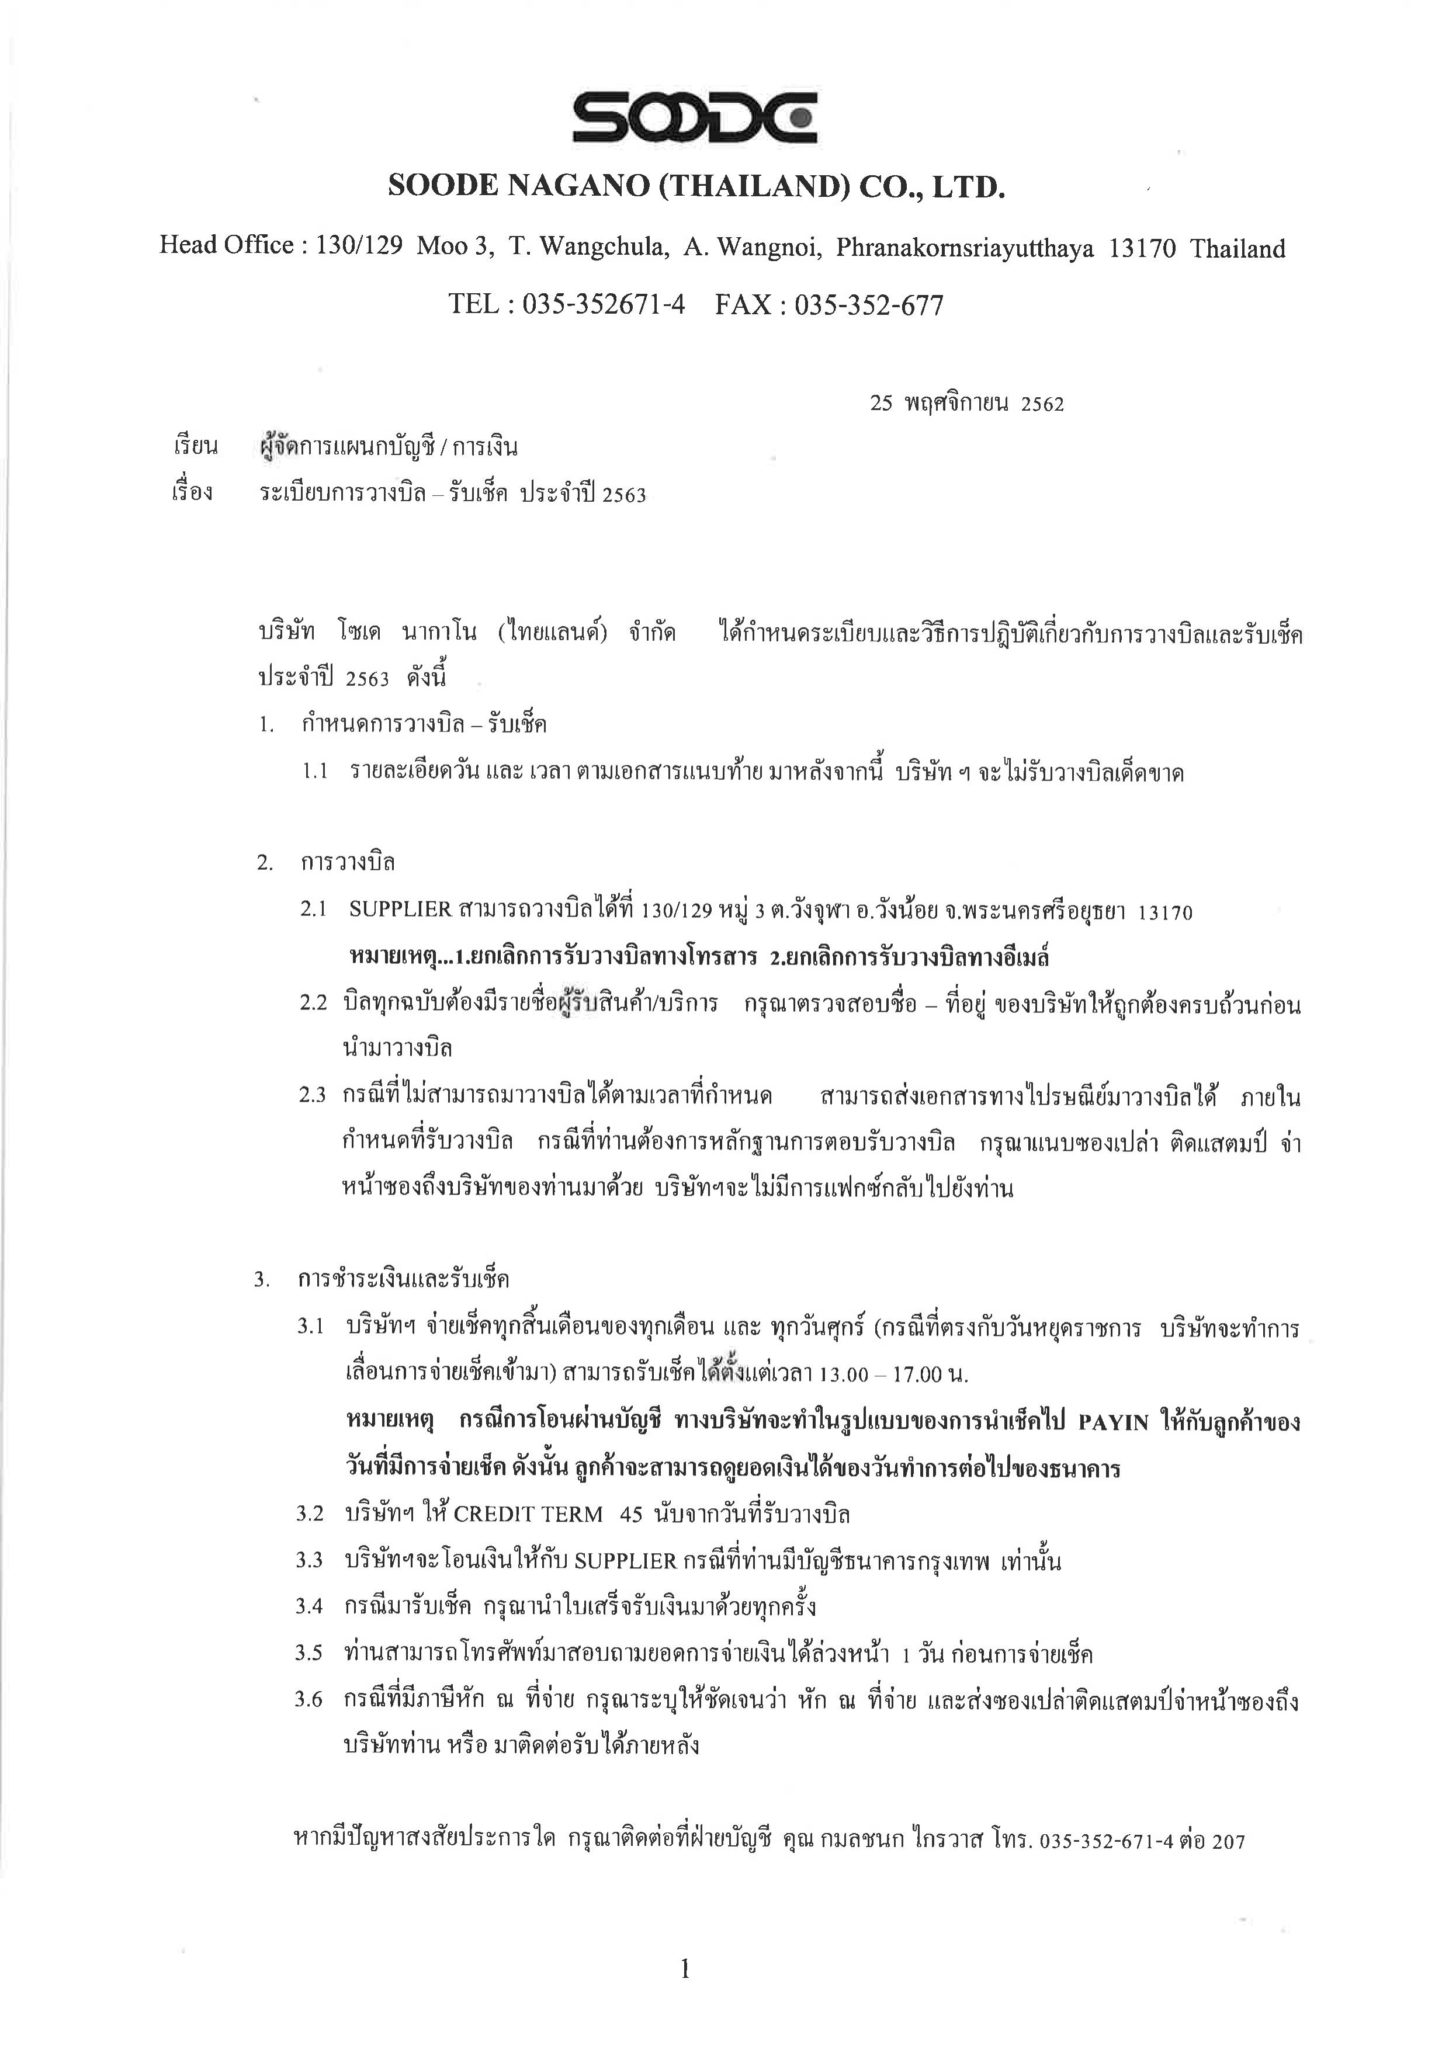 payment-schedule-2020-soode-nagano-thailand-co-ltd